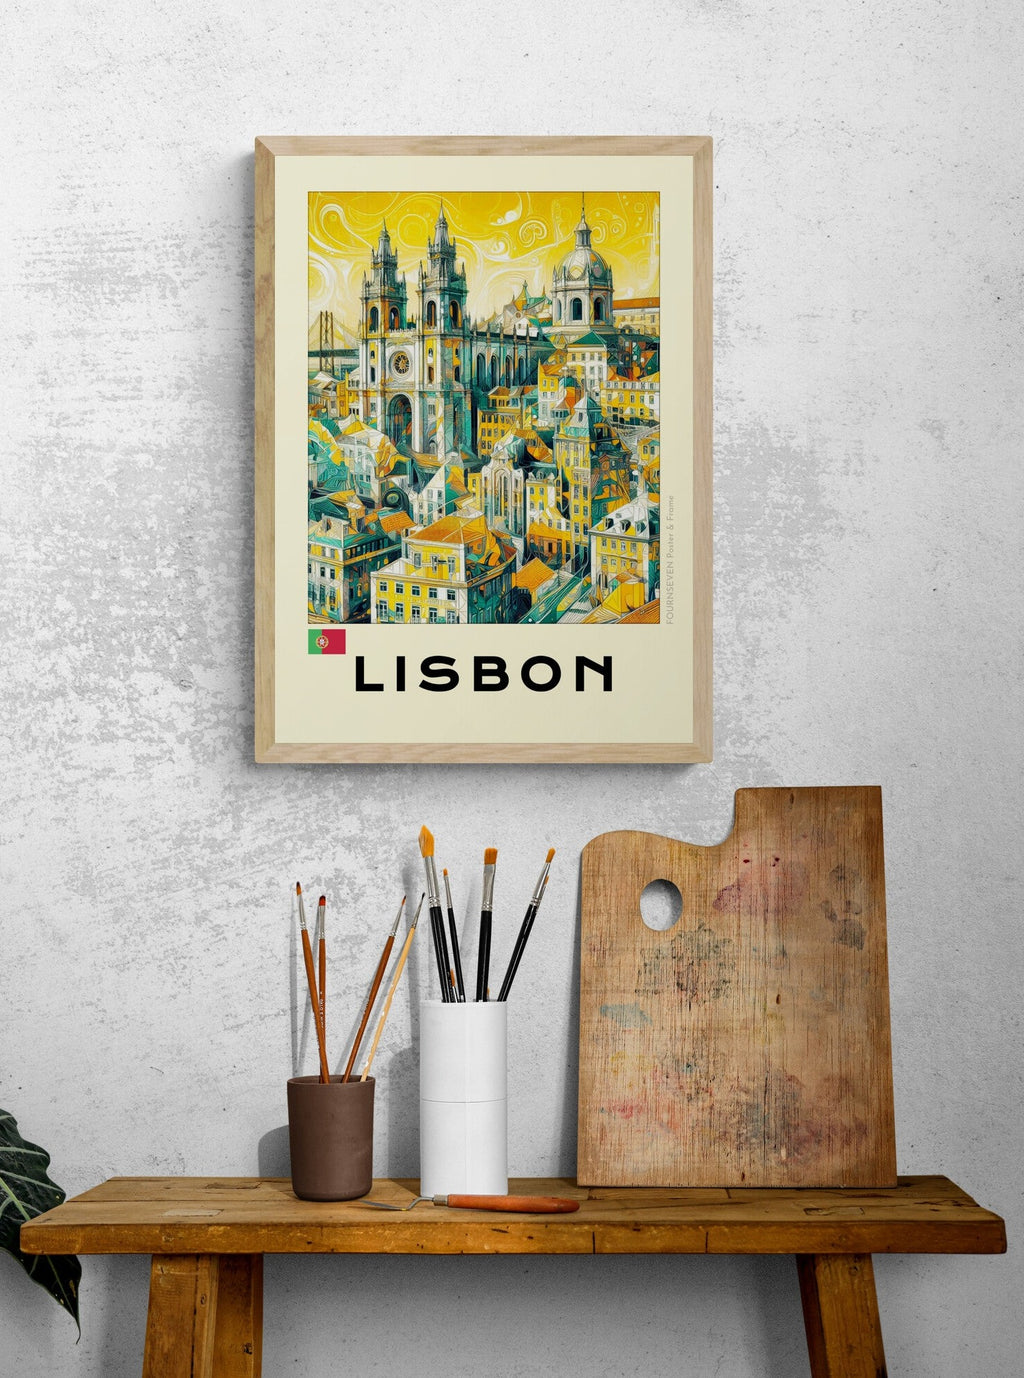 Lisbon abstract digital artwork poster.